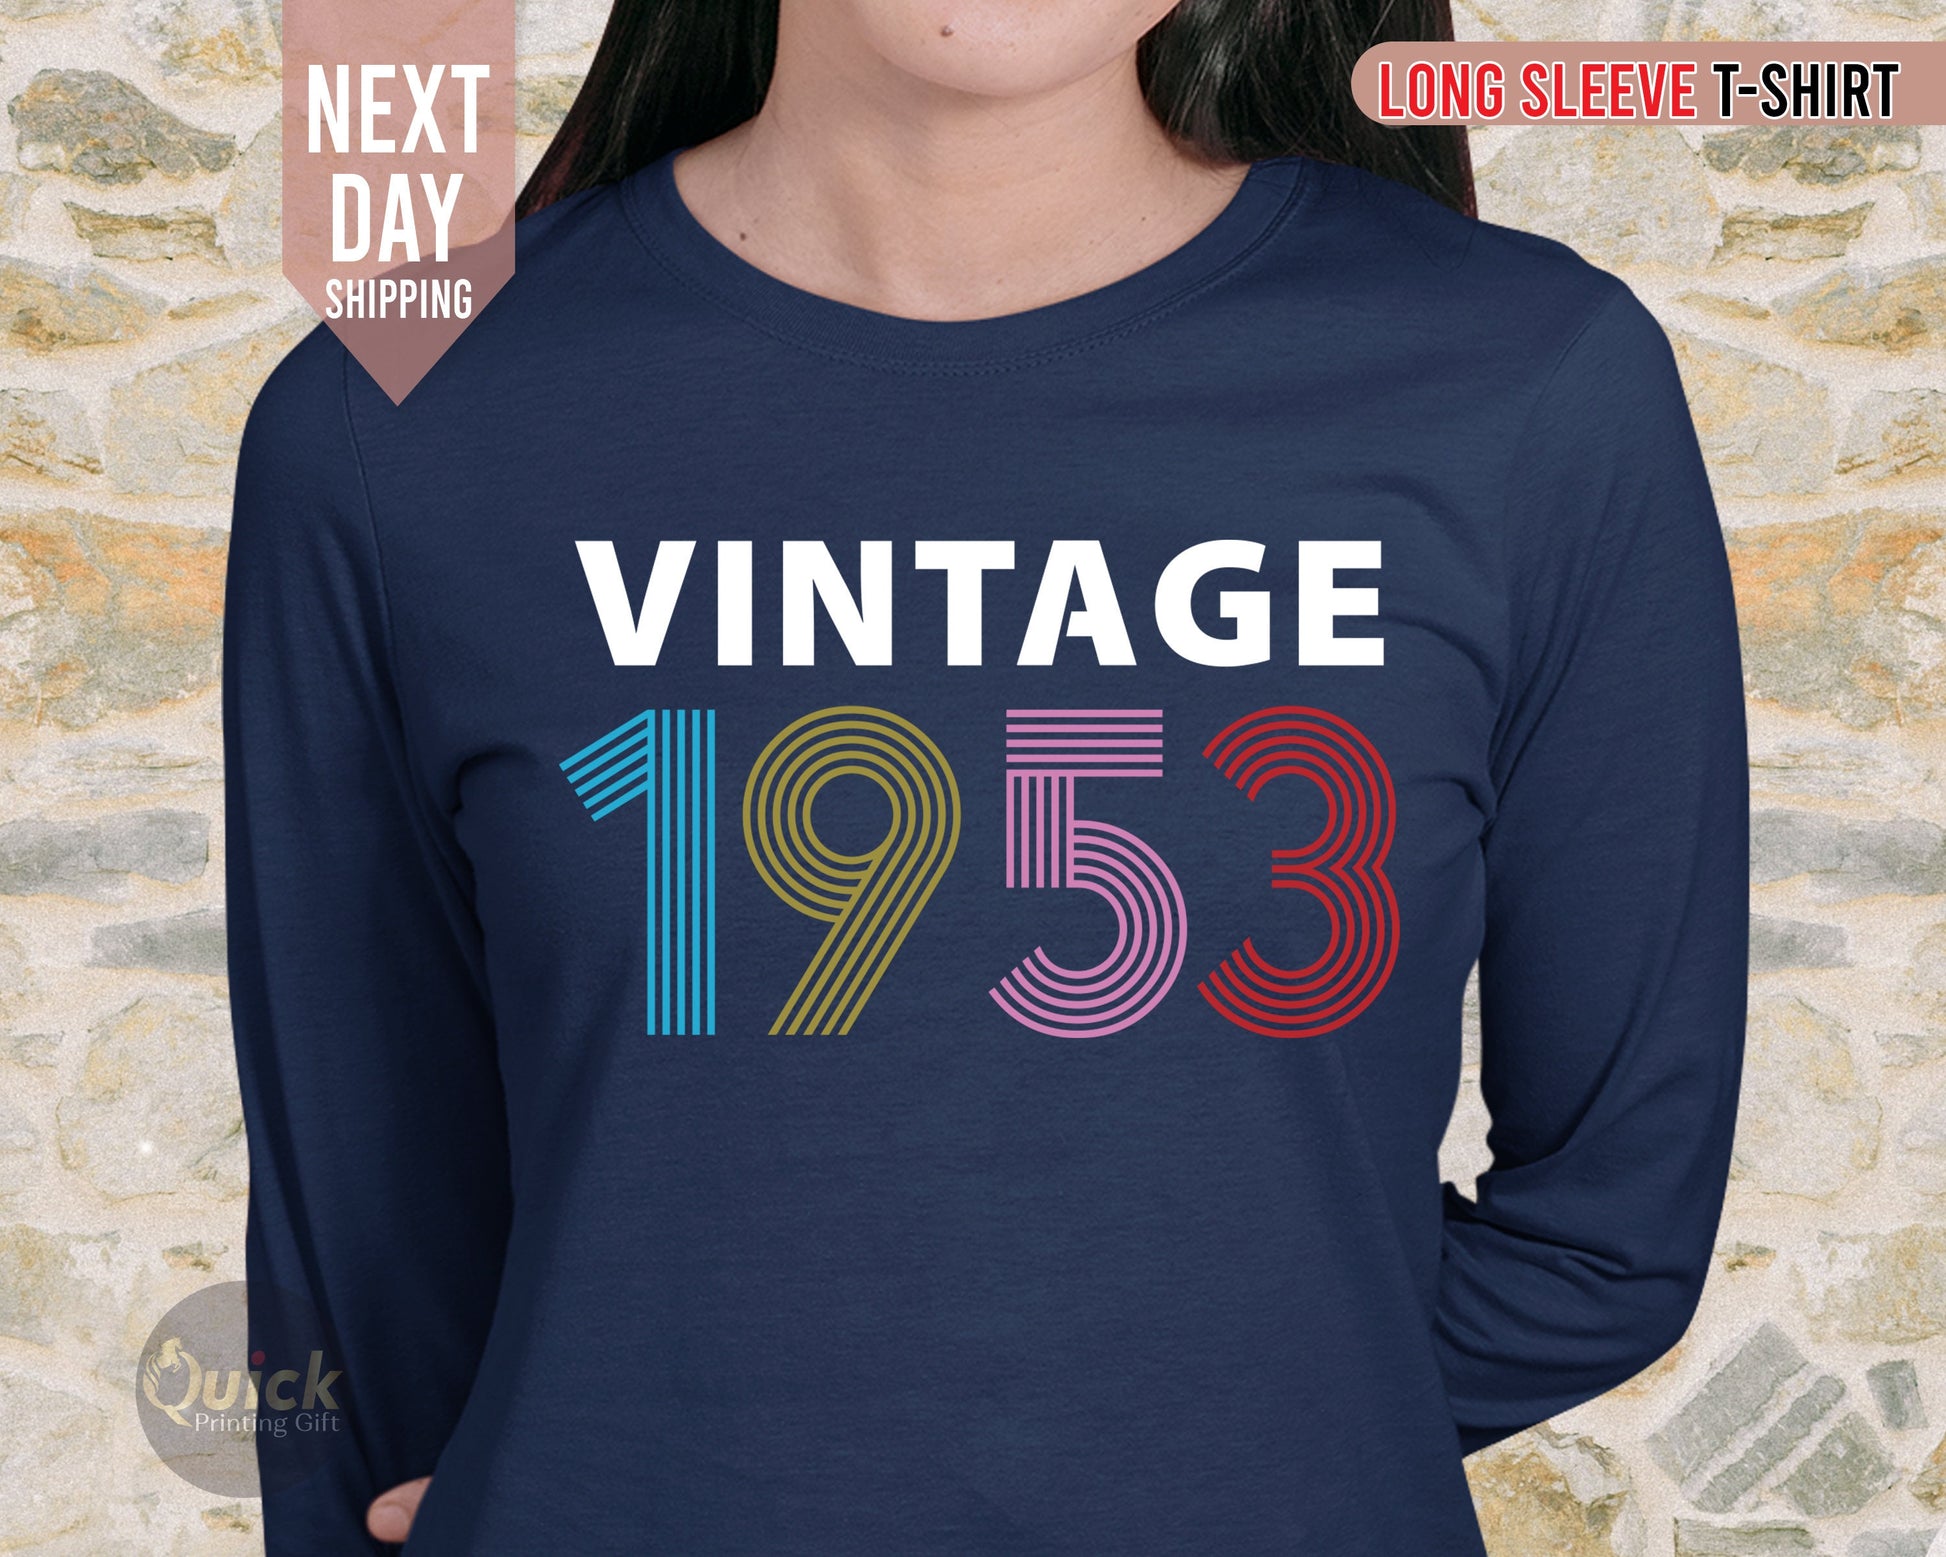 Vintage 1953 Long Sleeve Shirt